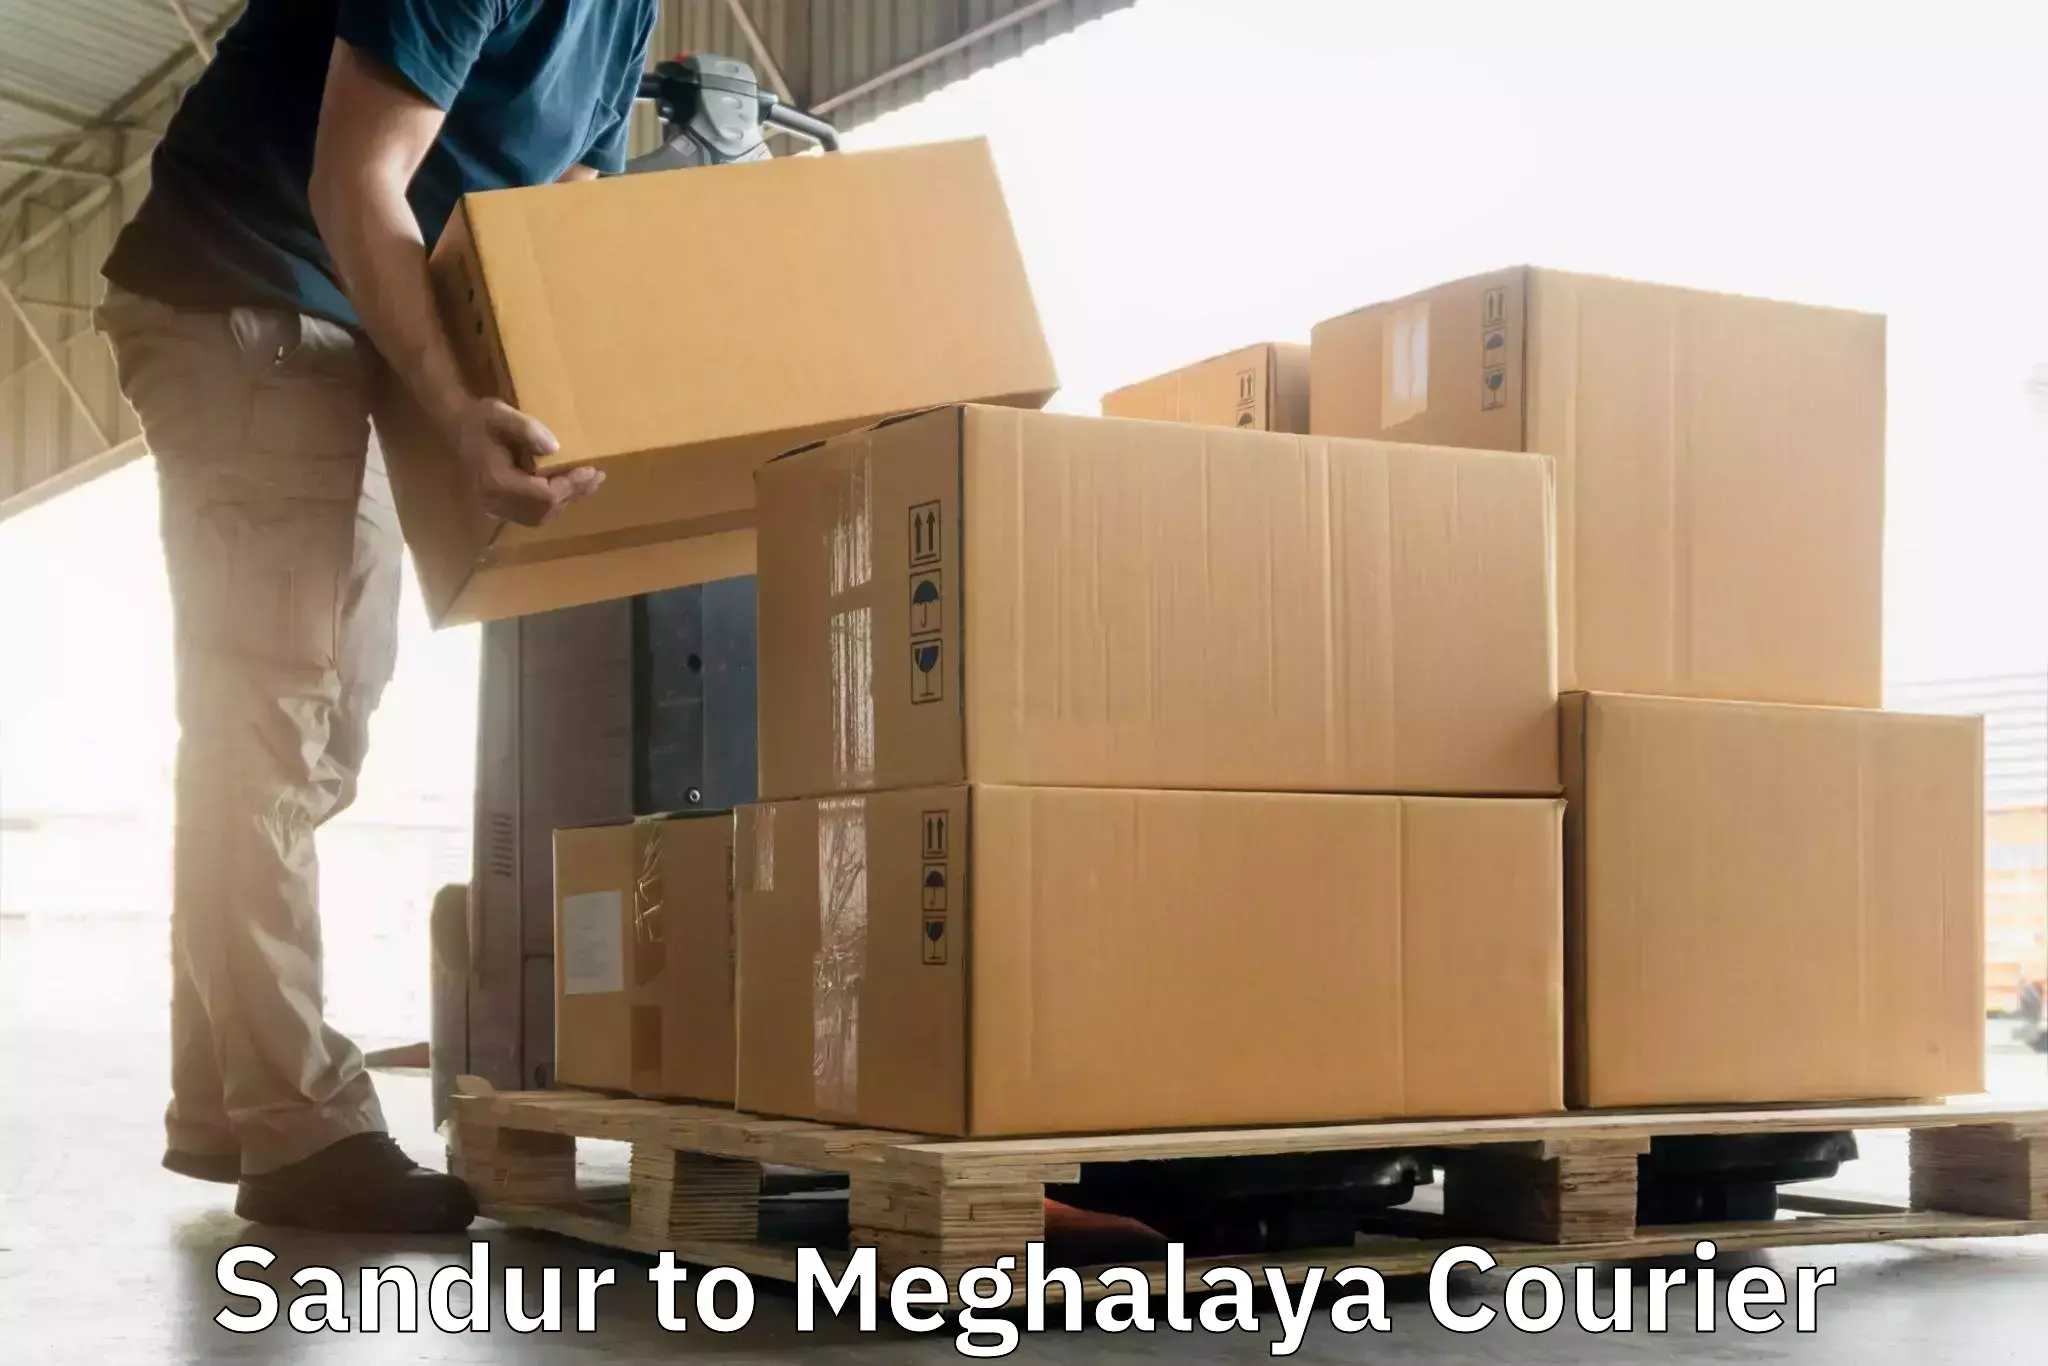 Next day courier Sandur to Meghalaya